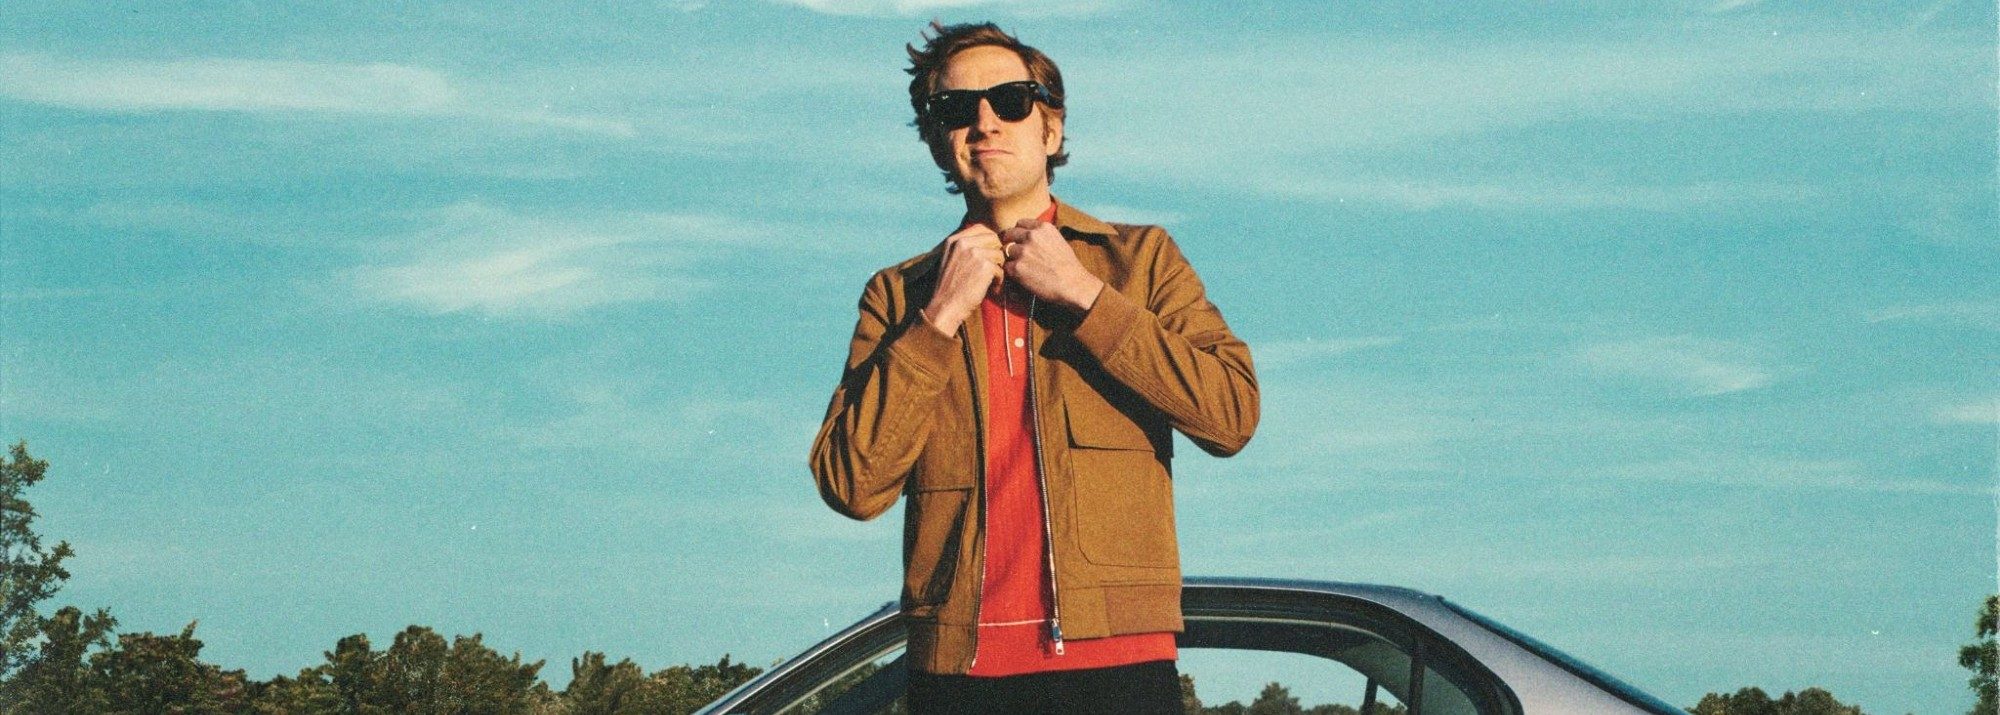 Ben Rector Shares Inspiration Behind “Range Rover” on ‘Pitch List’